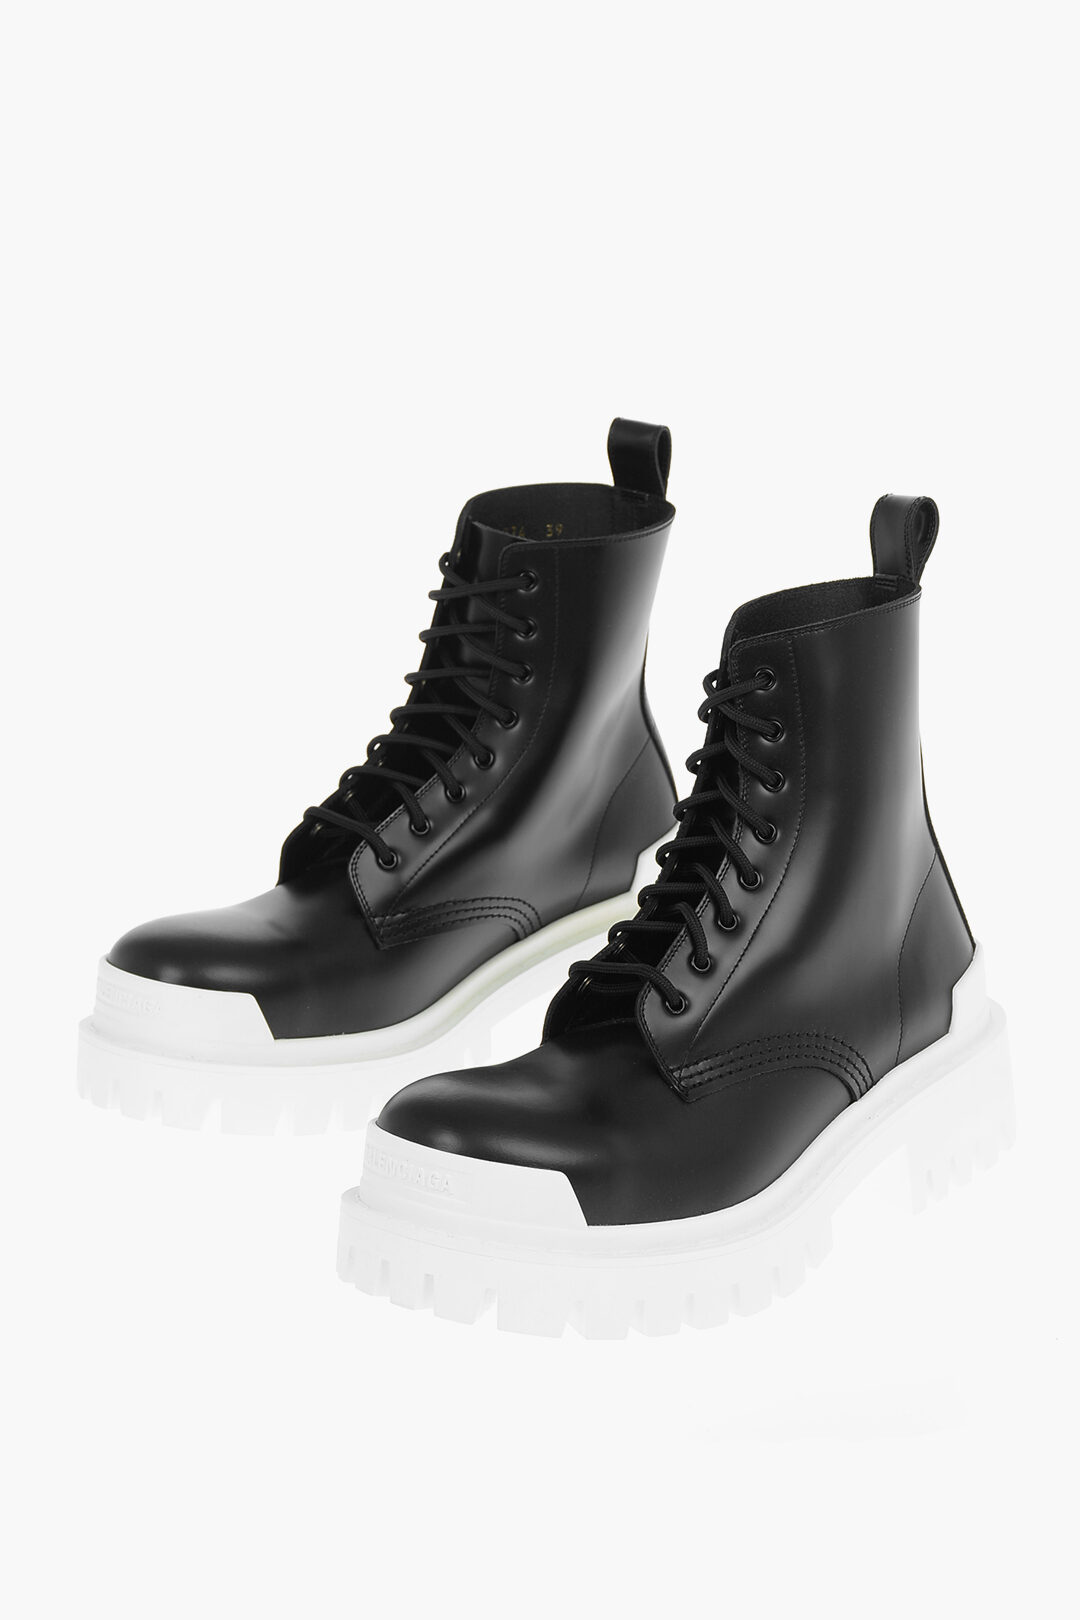 Leather boots Balenciaga Black size 44 EU in Leather  28523936